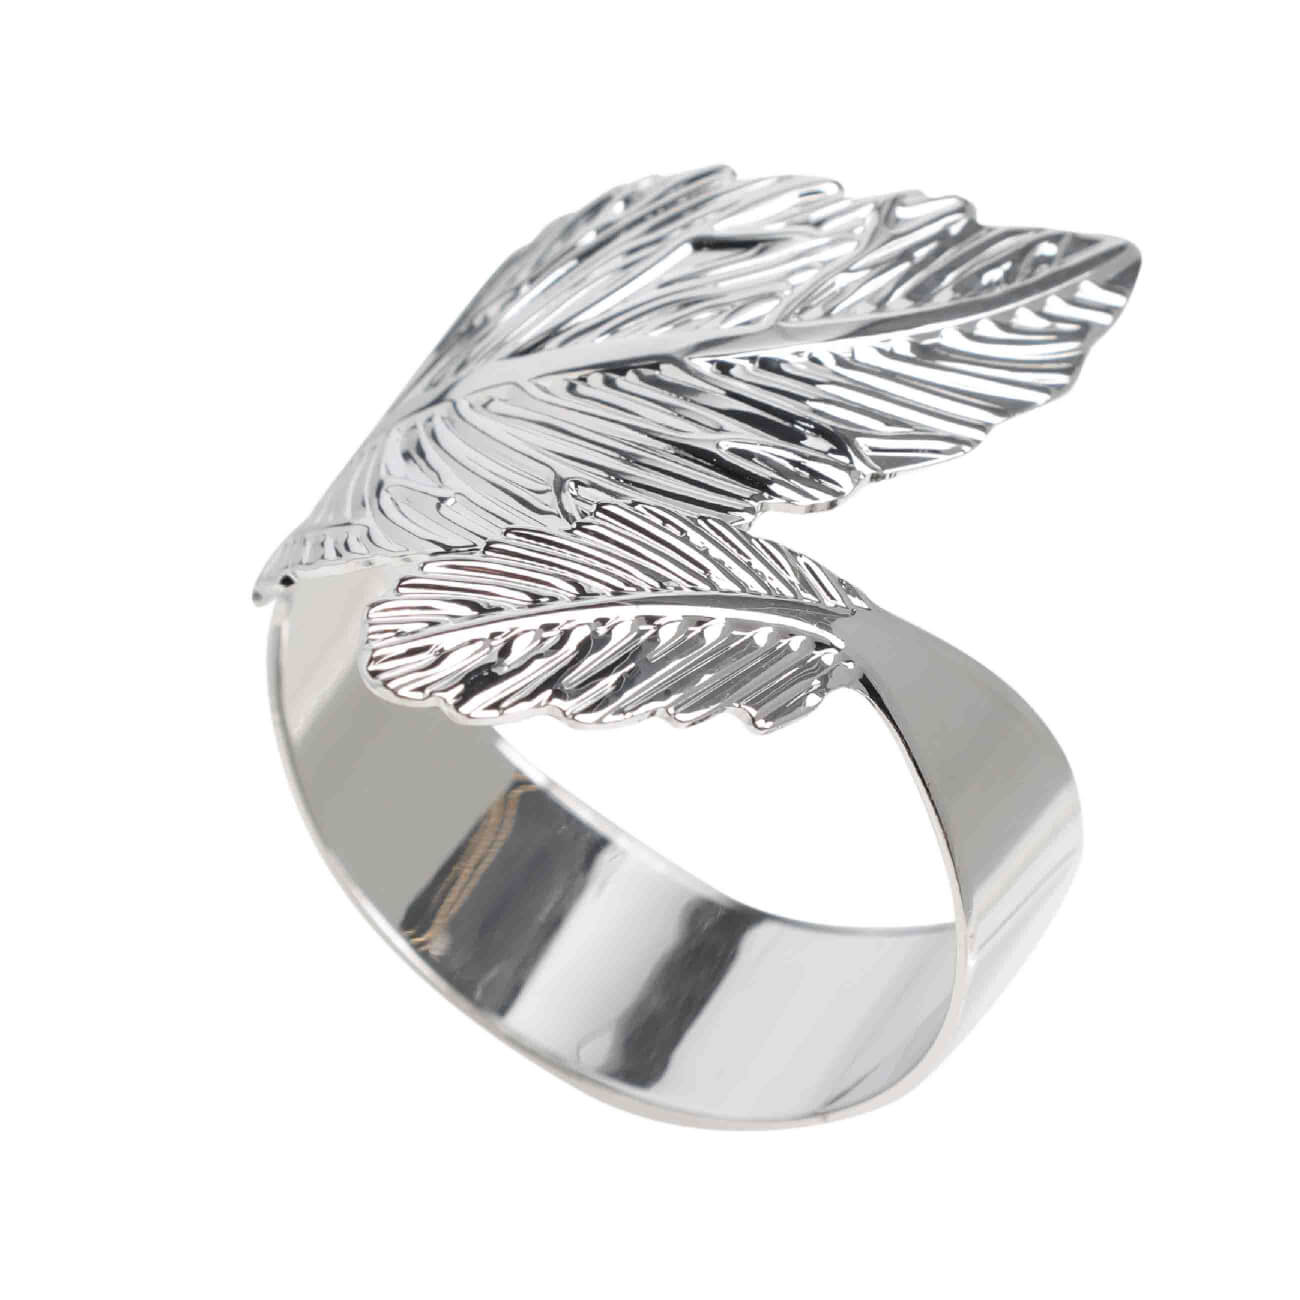 Кольцо для салфеток, 5 см, металл, серебристое, Листья, Print кольцо для салфеток 5 см 2 шт металл серебристое перо feather